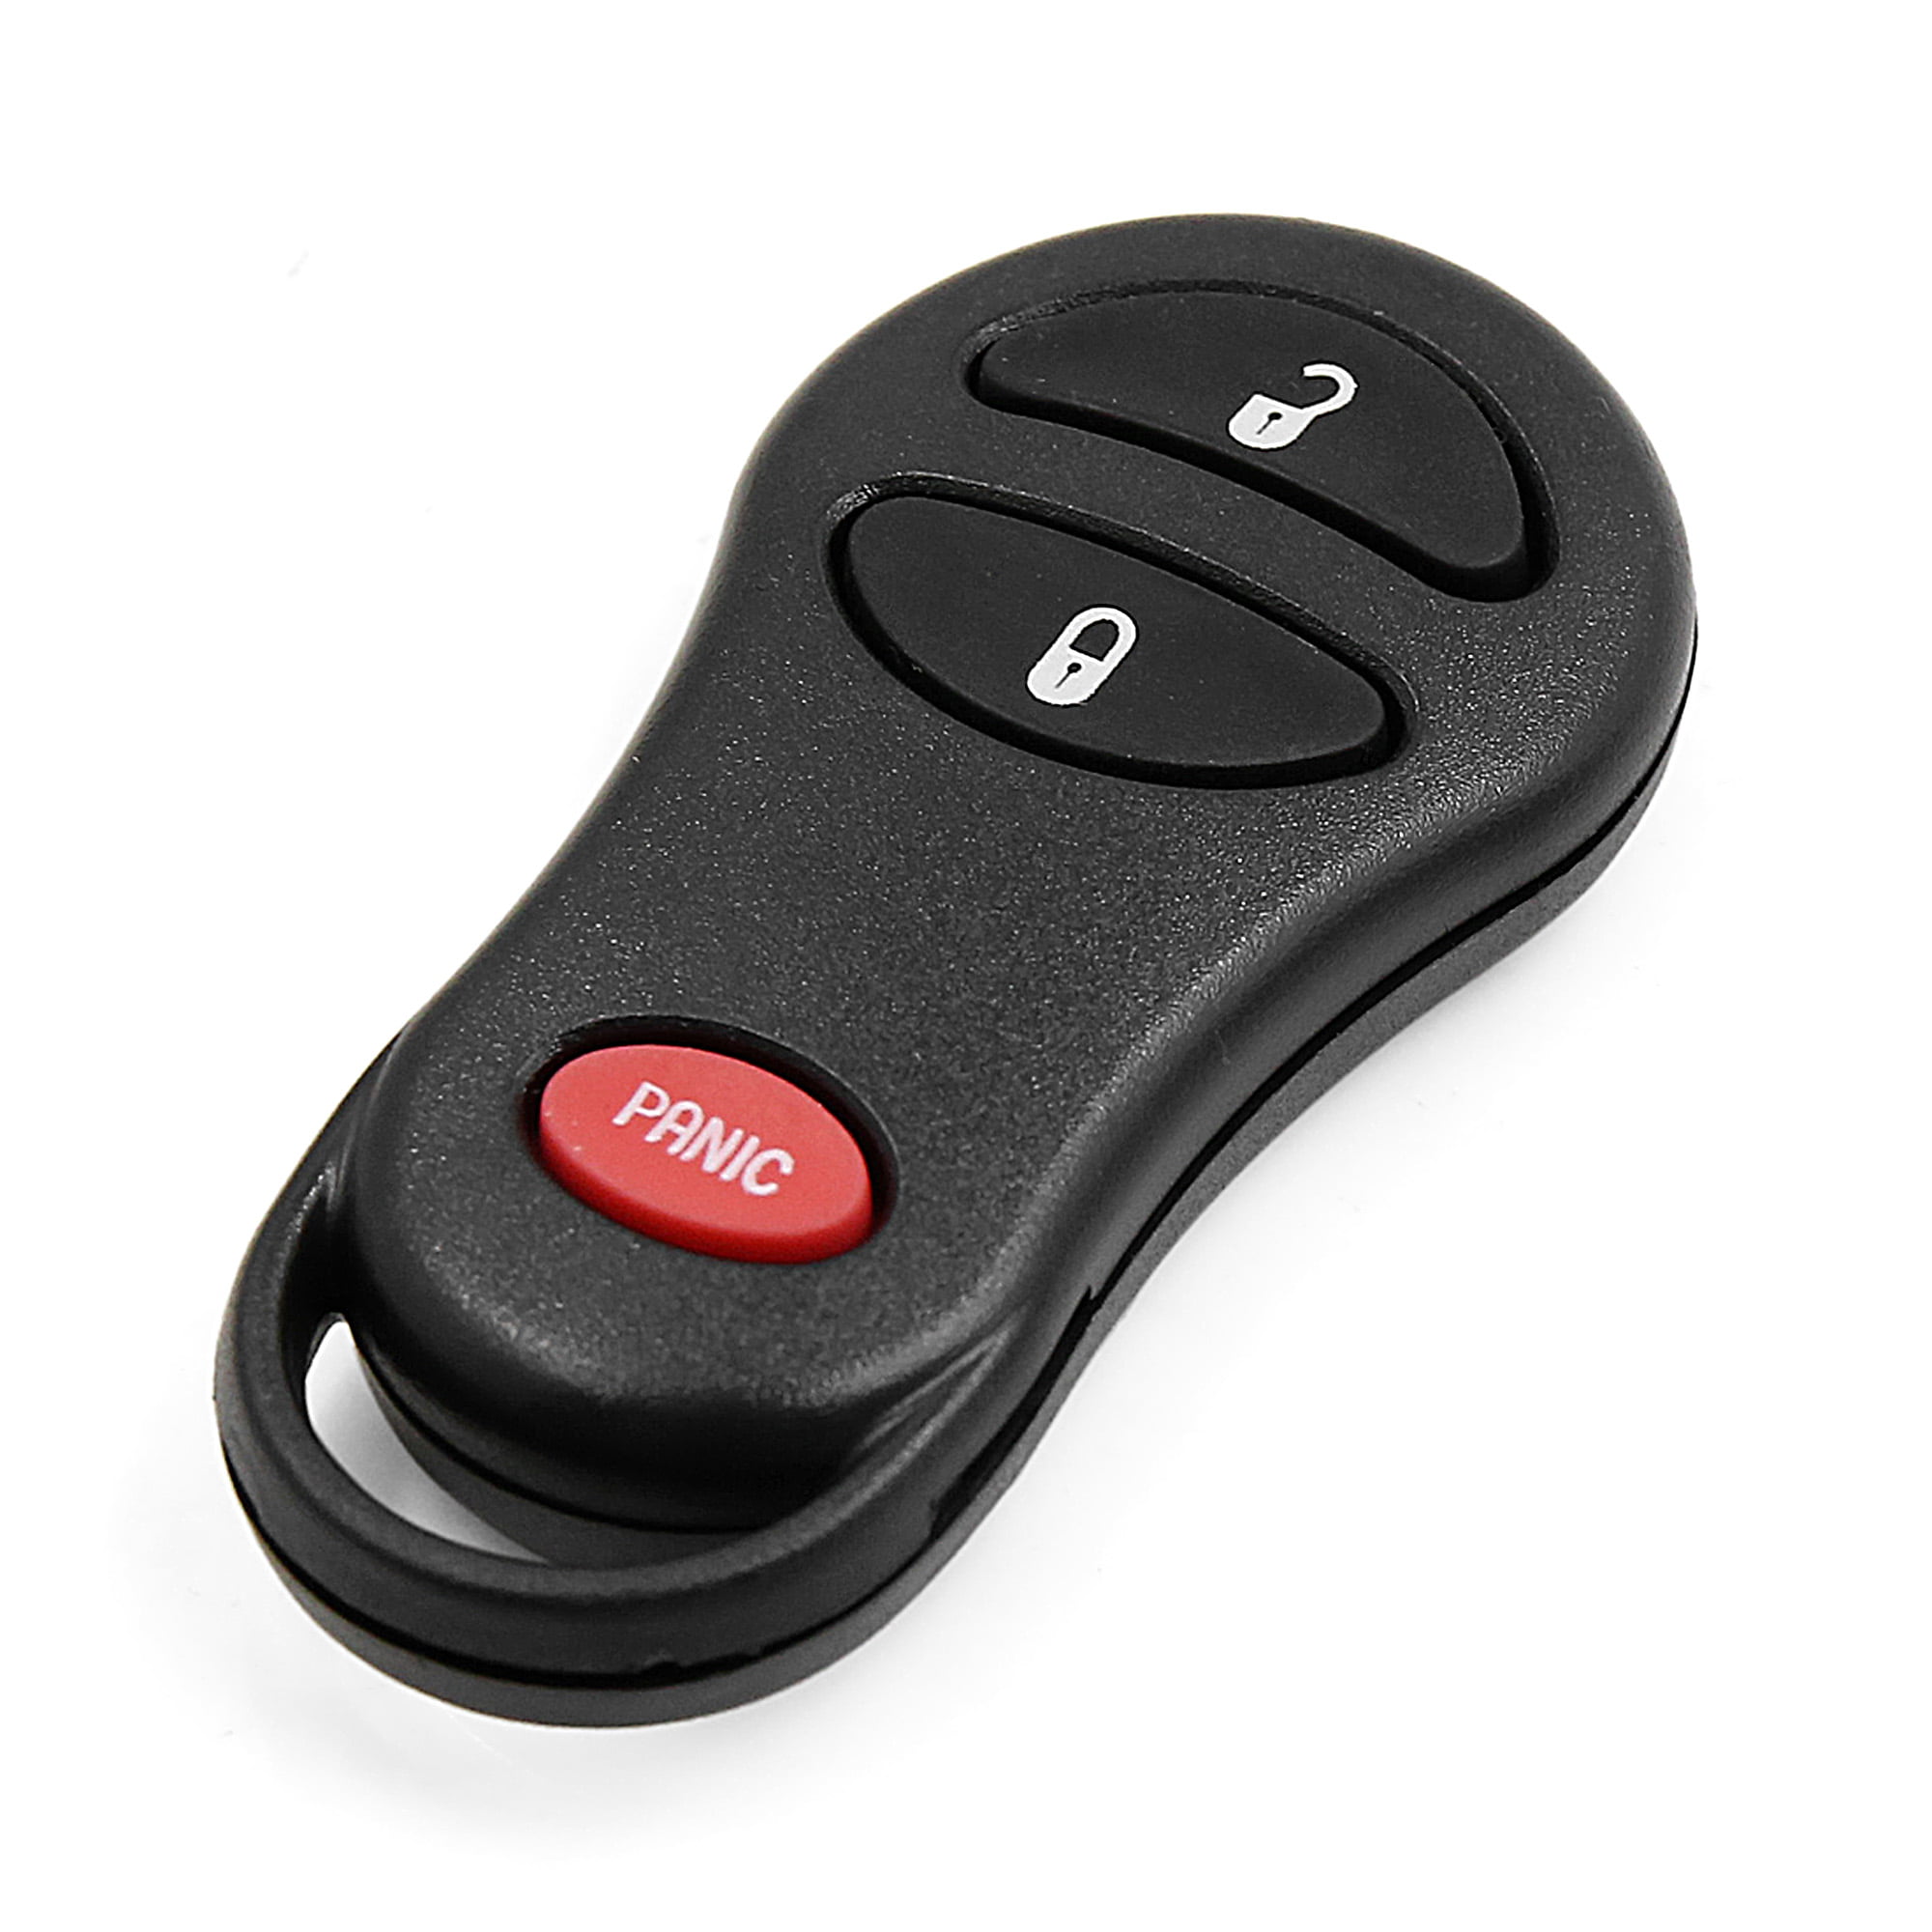 2 Replacement Car Key Fob Remote for Dodge Dakota Durango Ram 56045497